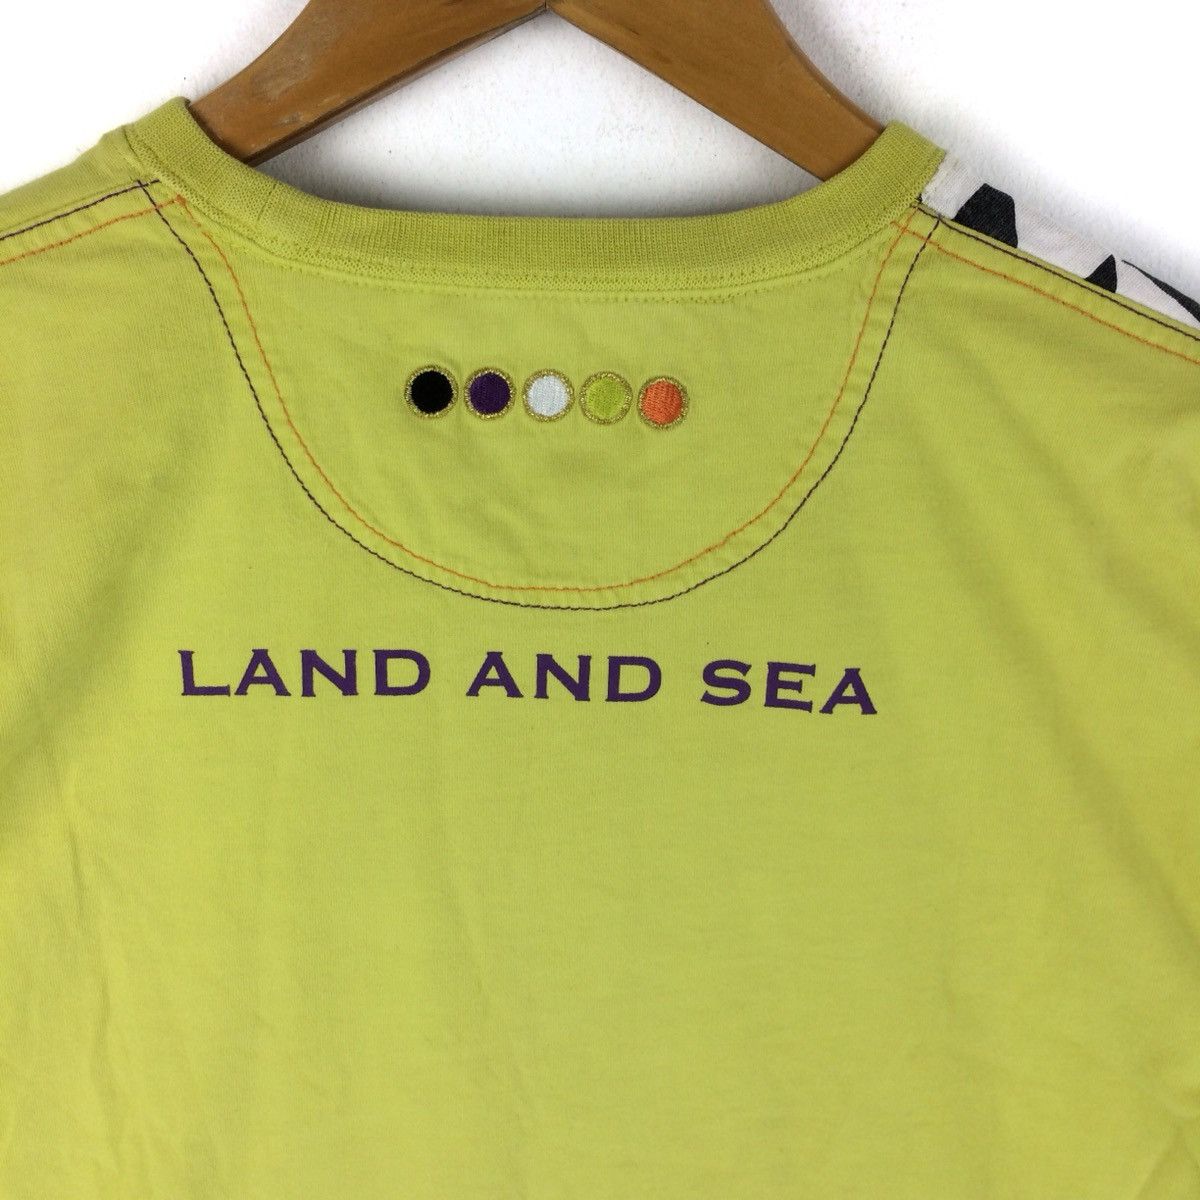 Coogi Embroidered Full Print Coogi Land And Sea Tshirt Size US M / EU 48-50 / 2 - 10 Preview